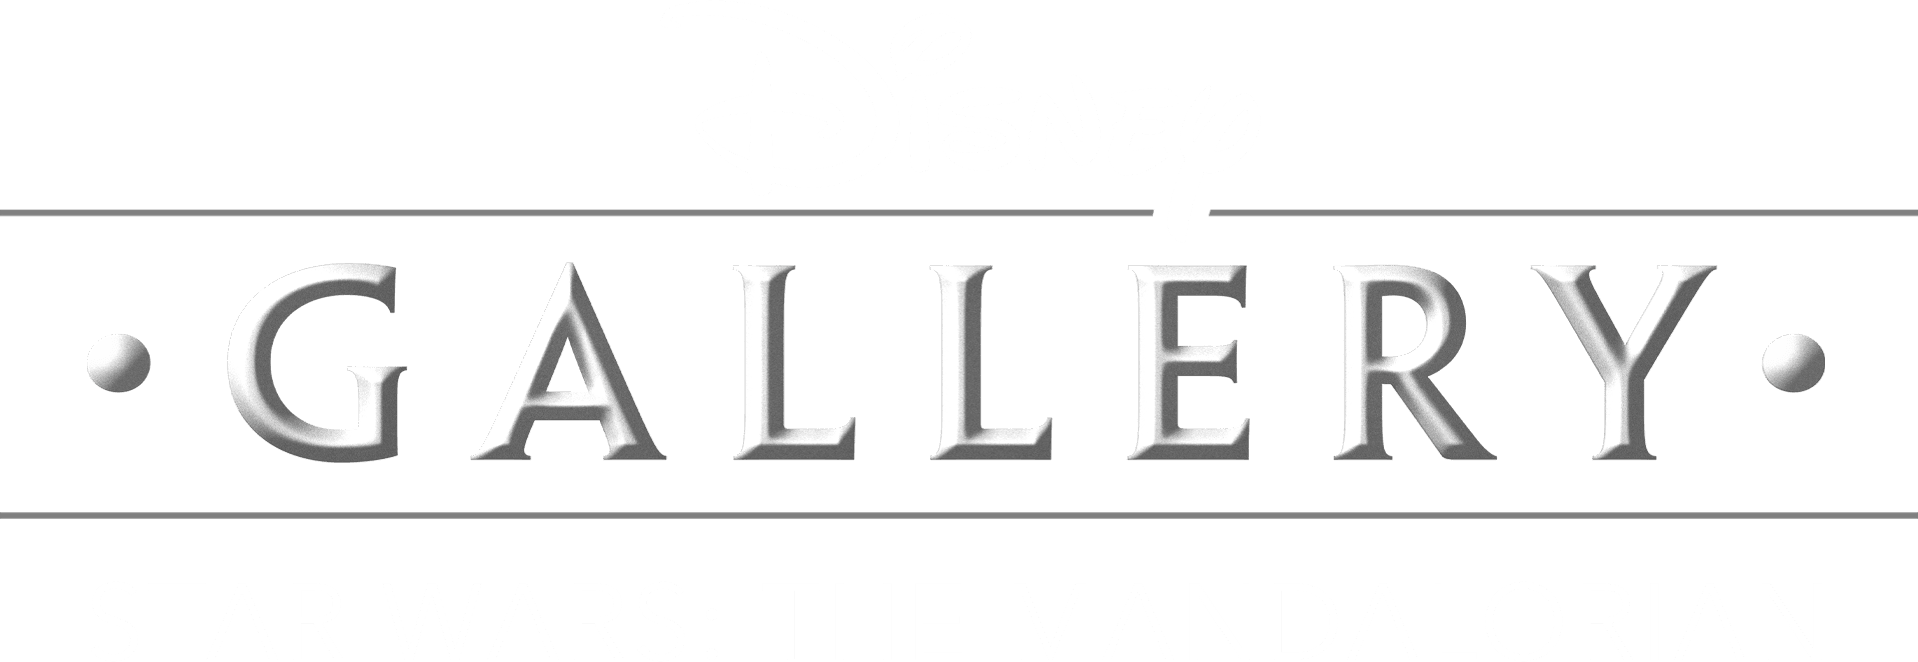 Disney Gallery / Star Wars: The Mandalorian logo